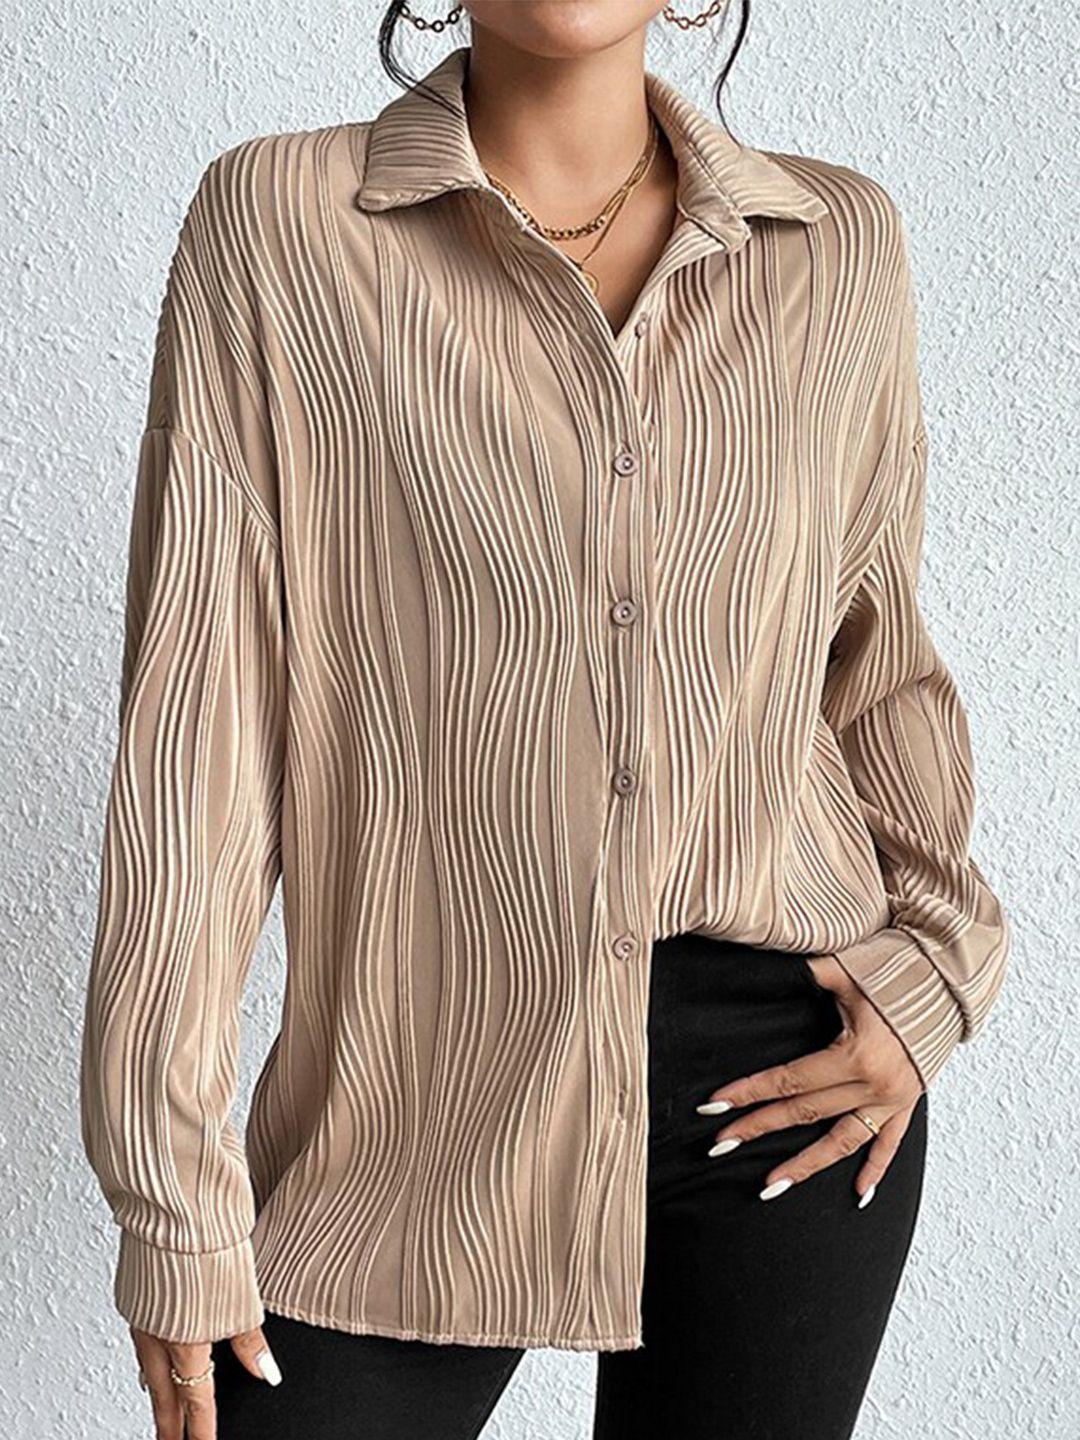 stylecast khaki self design spread collar casual shirt